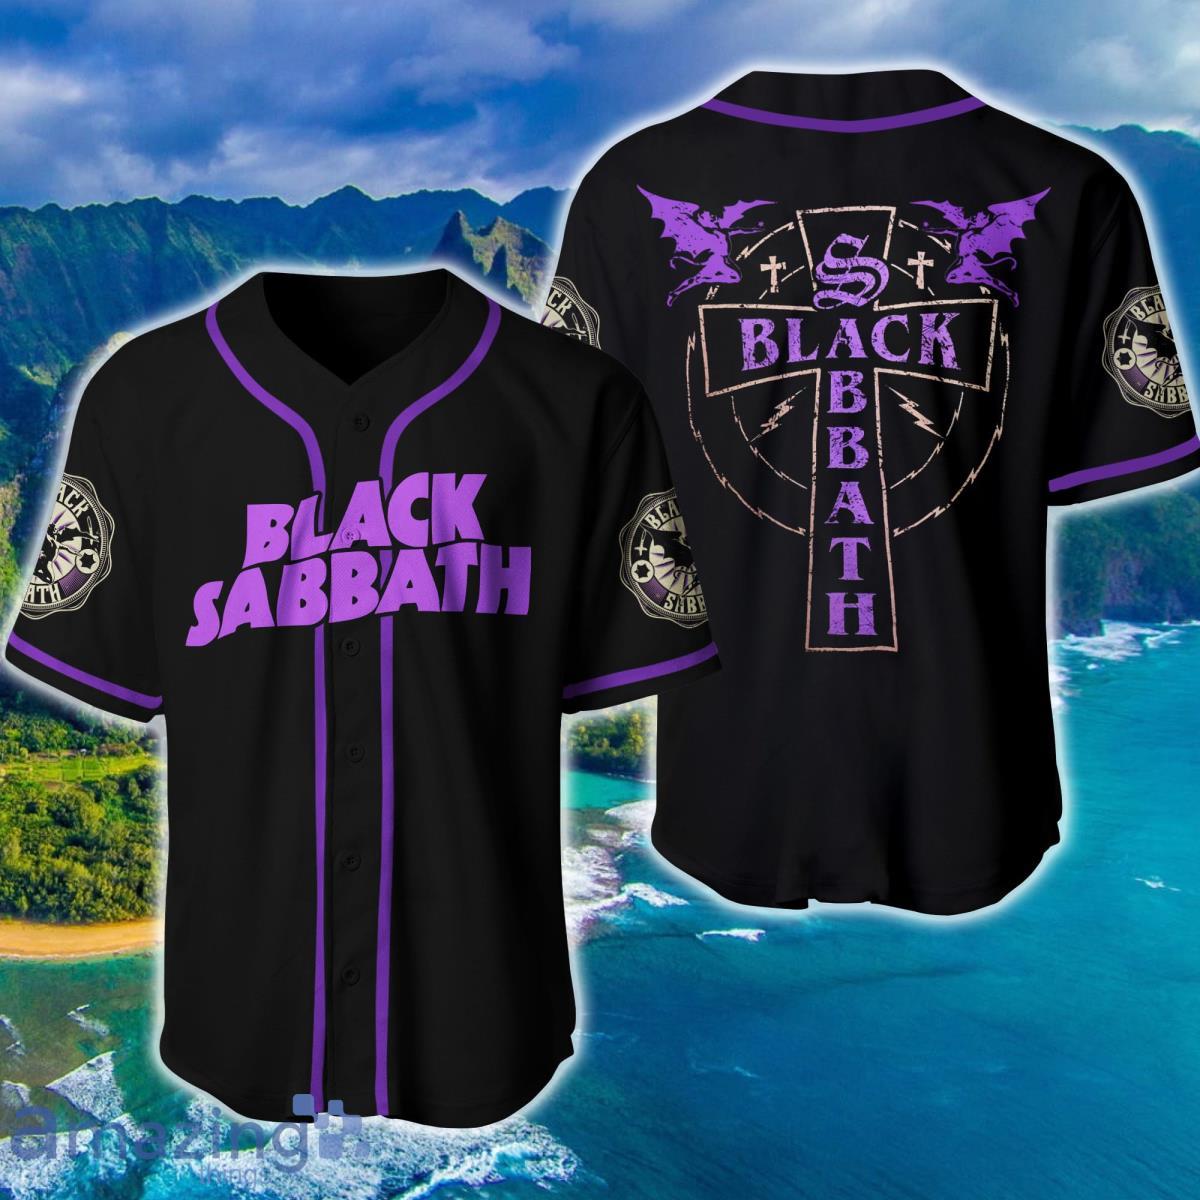 Black Sabbath Baseball Jersey Shirt Product Photo 1